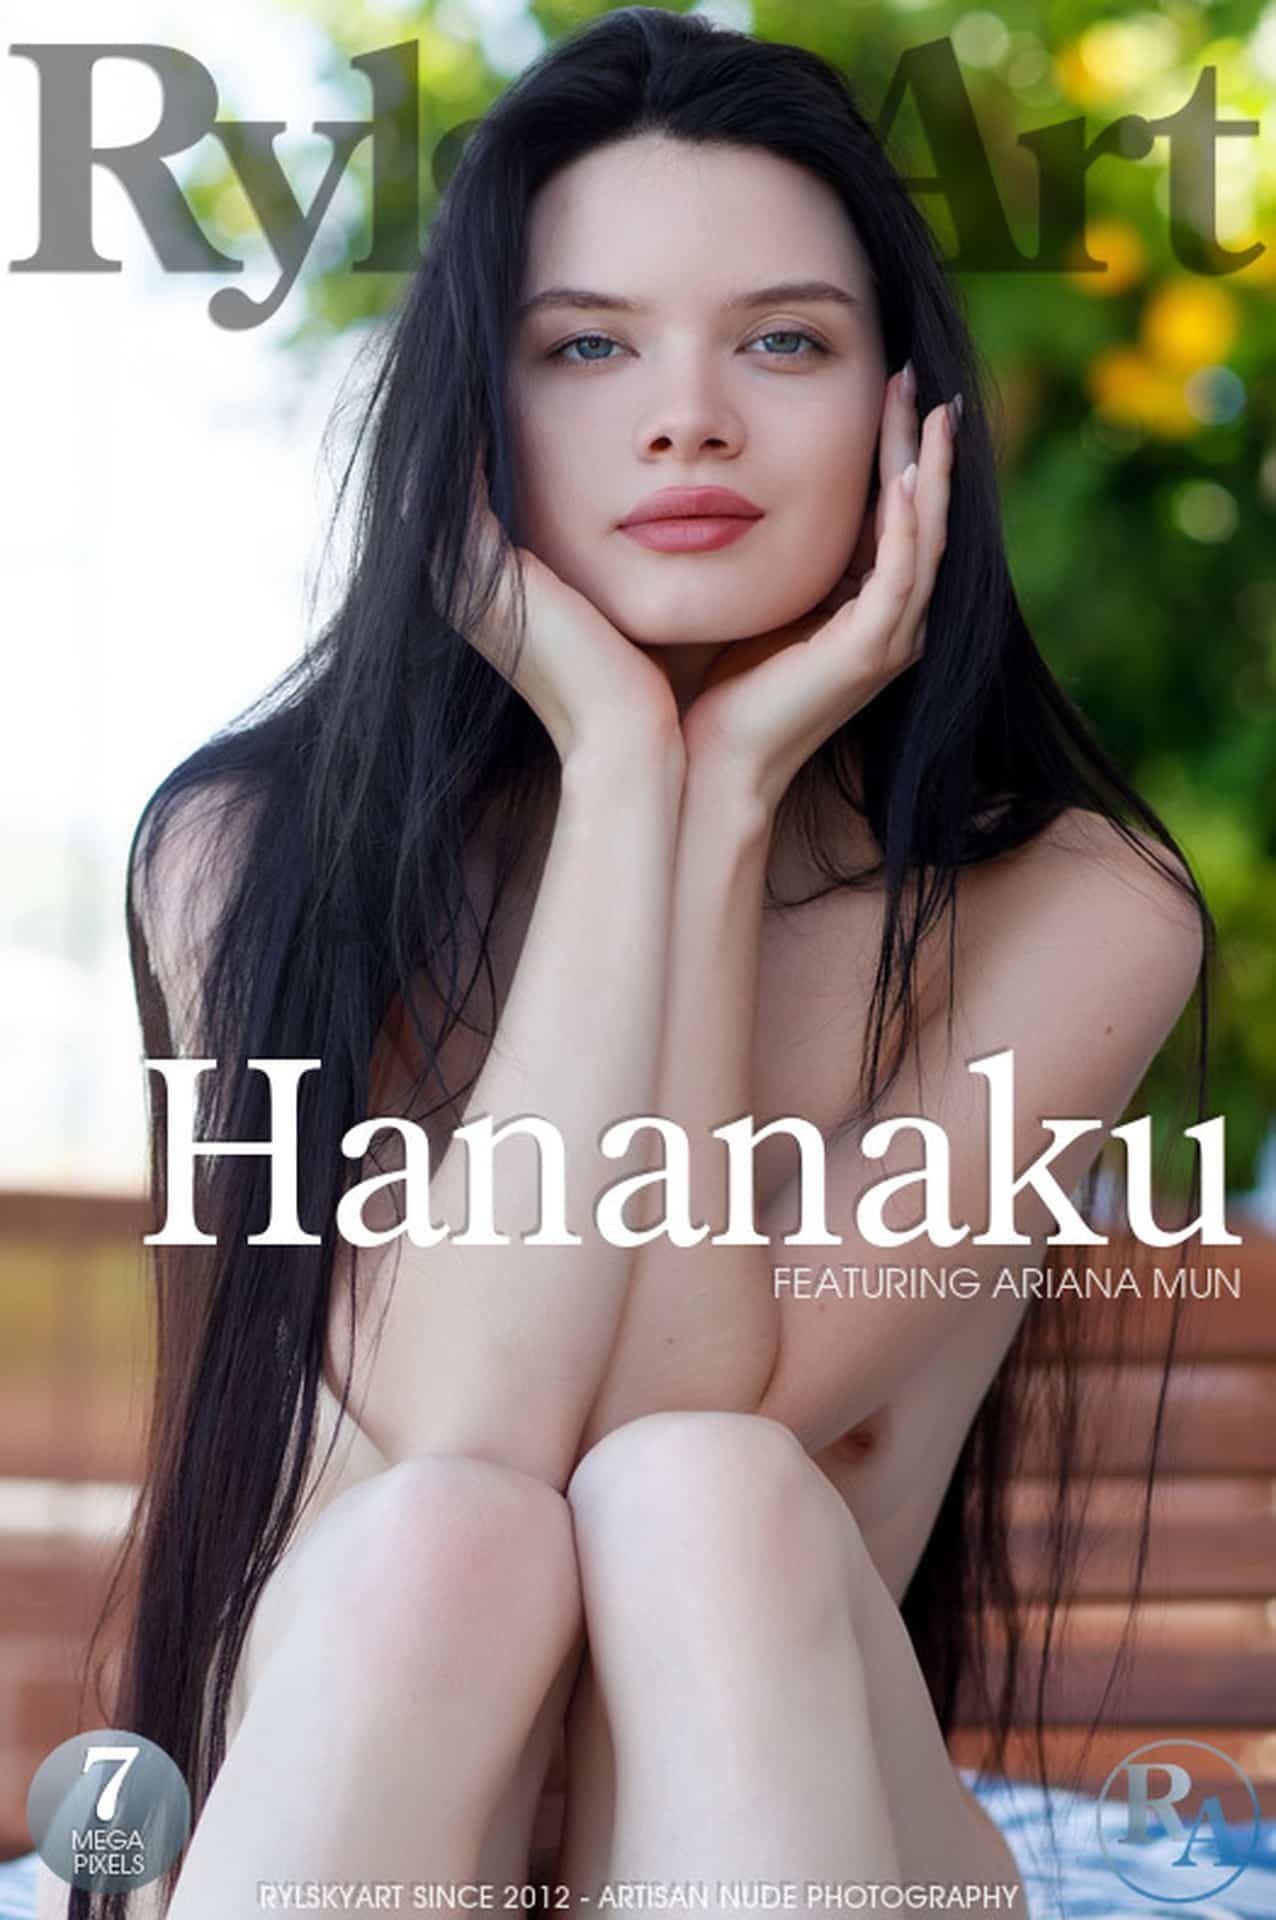 Super white girl in the backyard - Ariana Mun - Hananaku